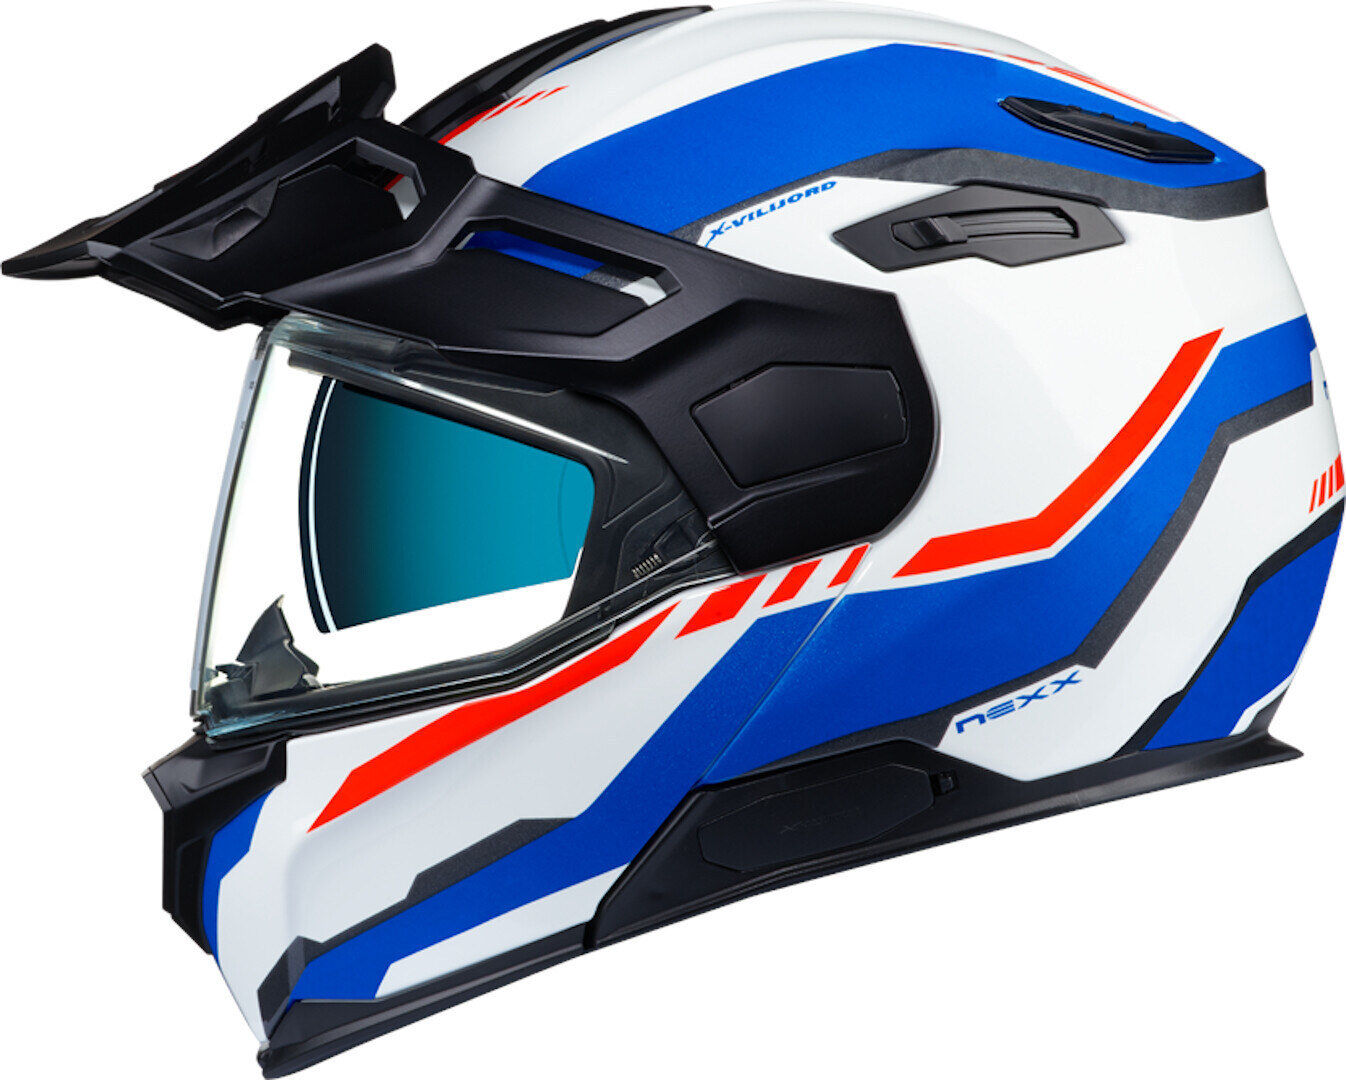 NEXX X.Vilijord Continental casco - Blanco Rojo Azul (2XL)